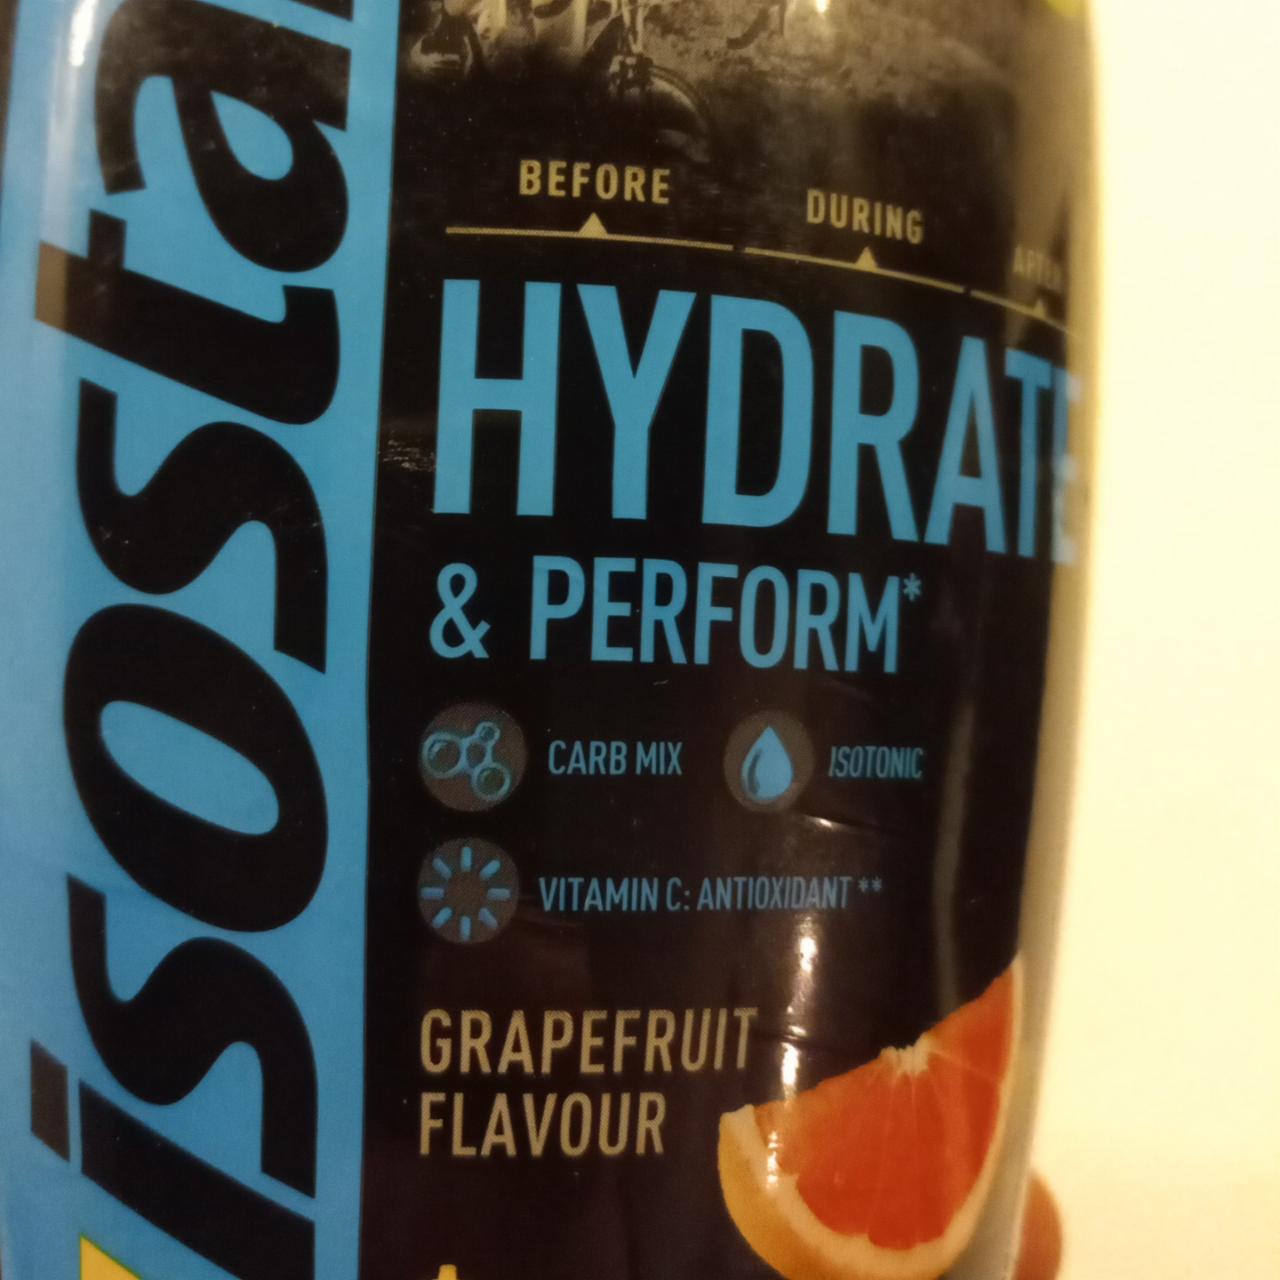 Zdjęcia - Hydrate & perform Grapefruit Isostar